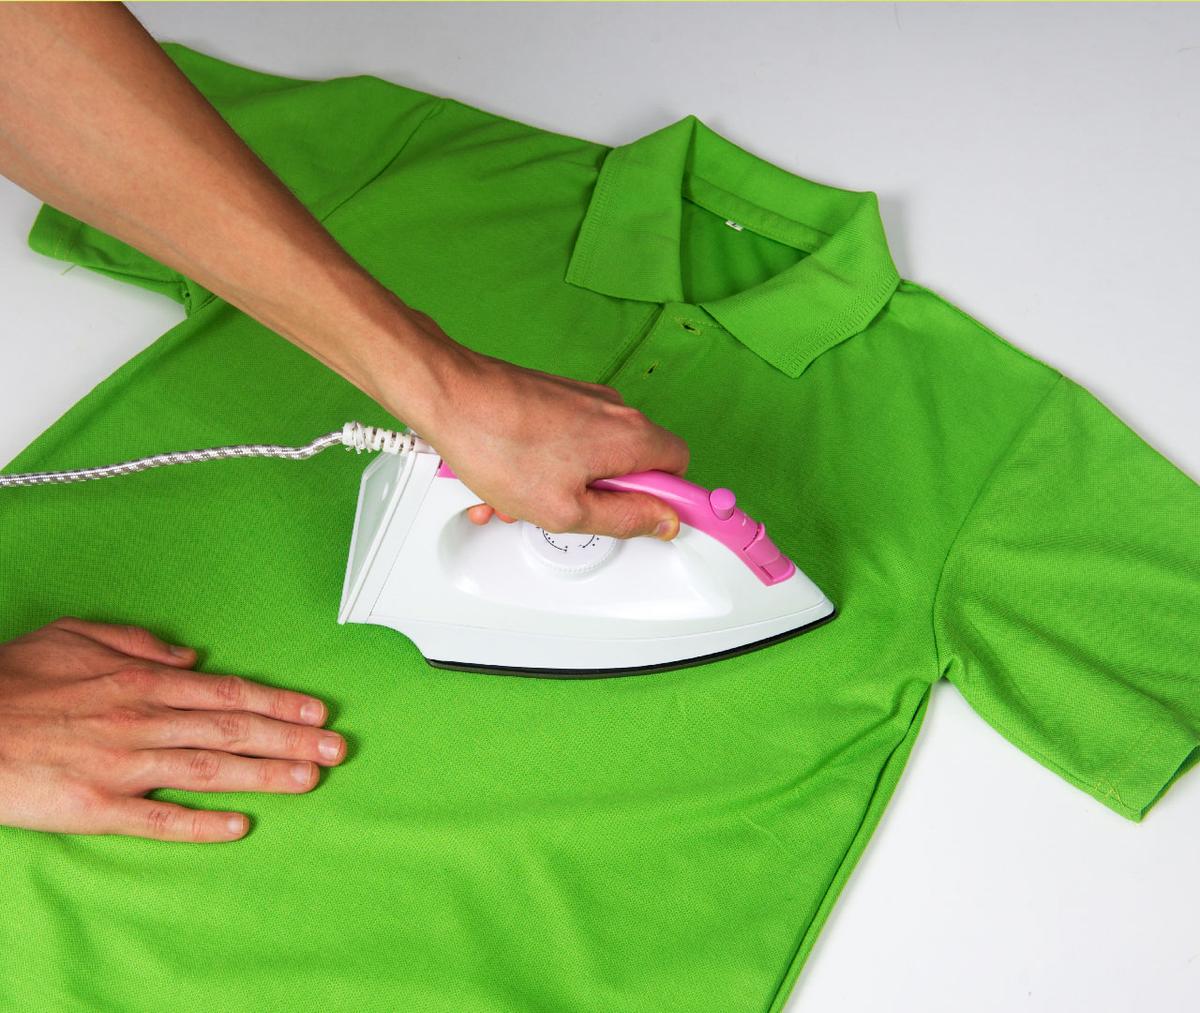 T-shirt ironing